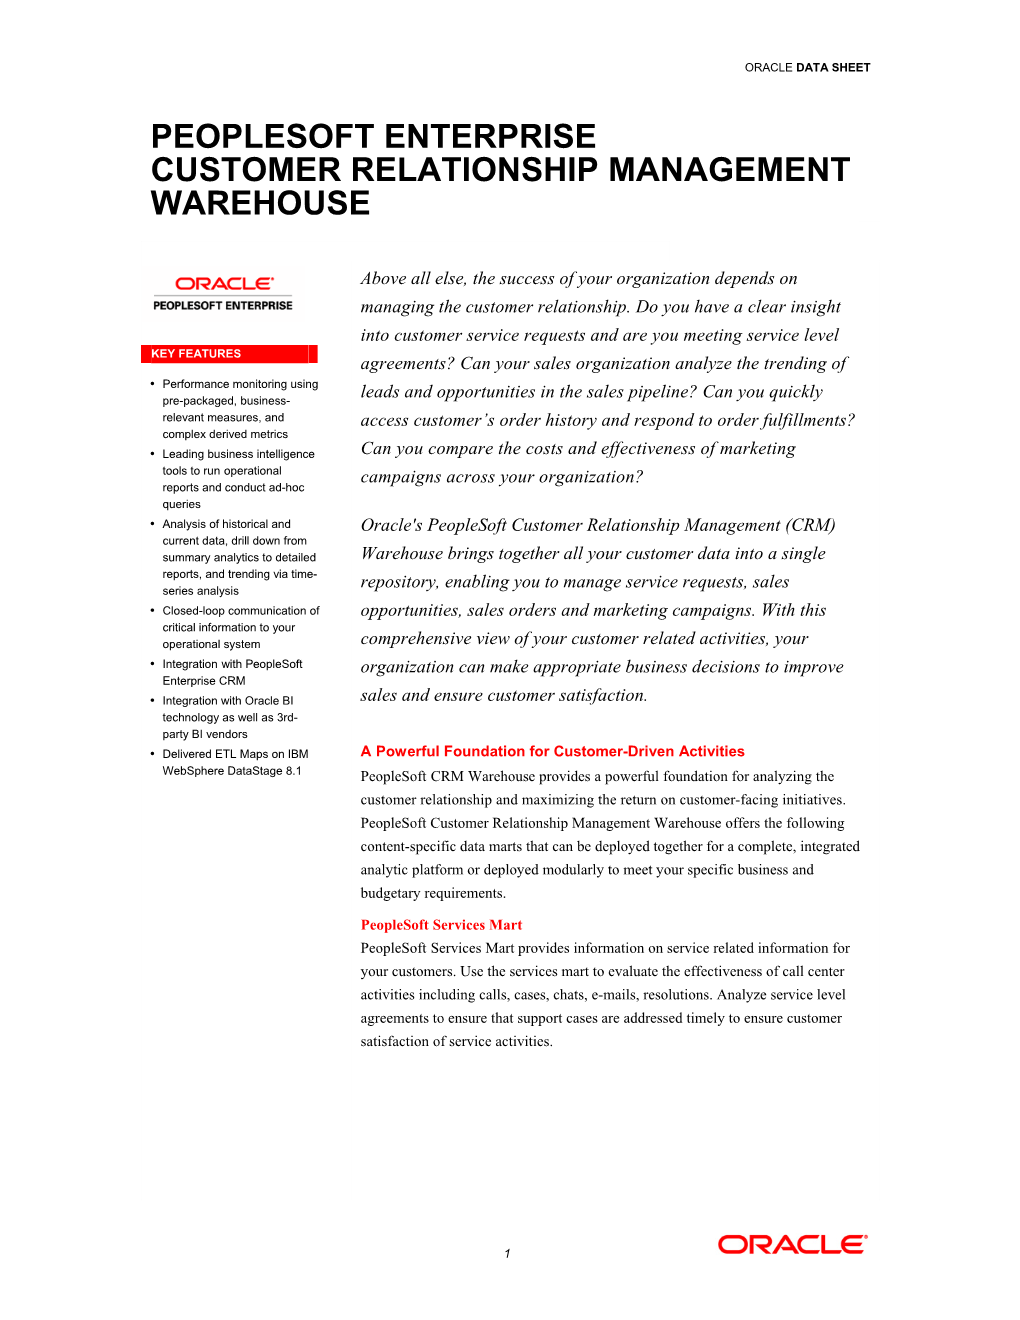 Peoplesoft Enterprise Customer Relationship Management Warehouse